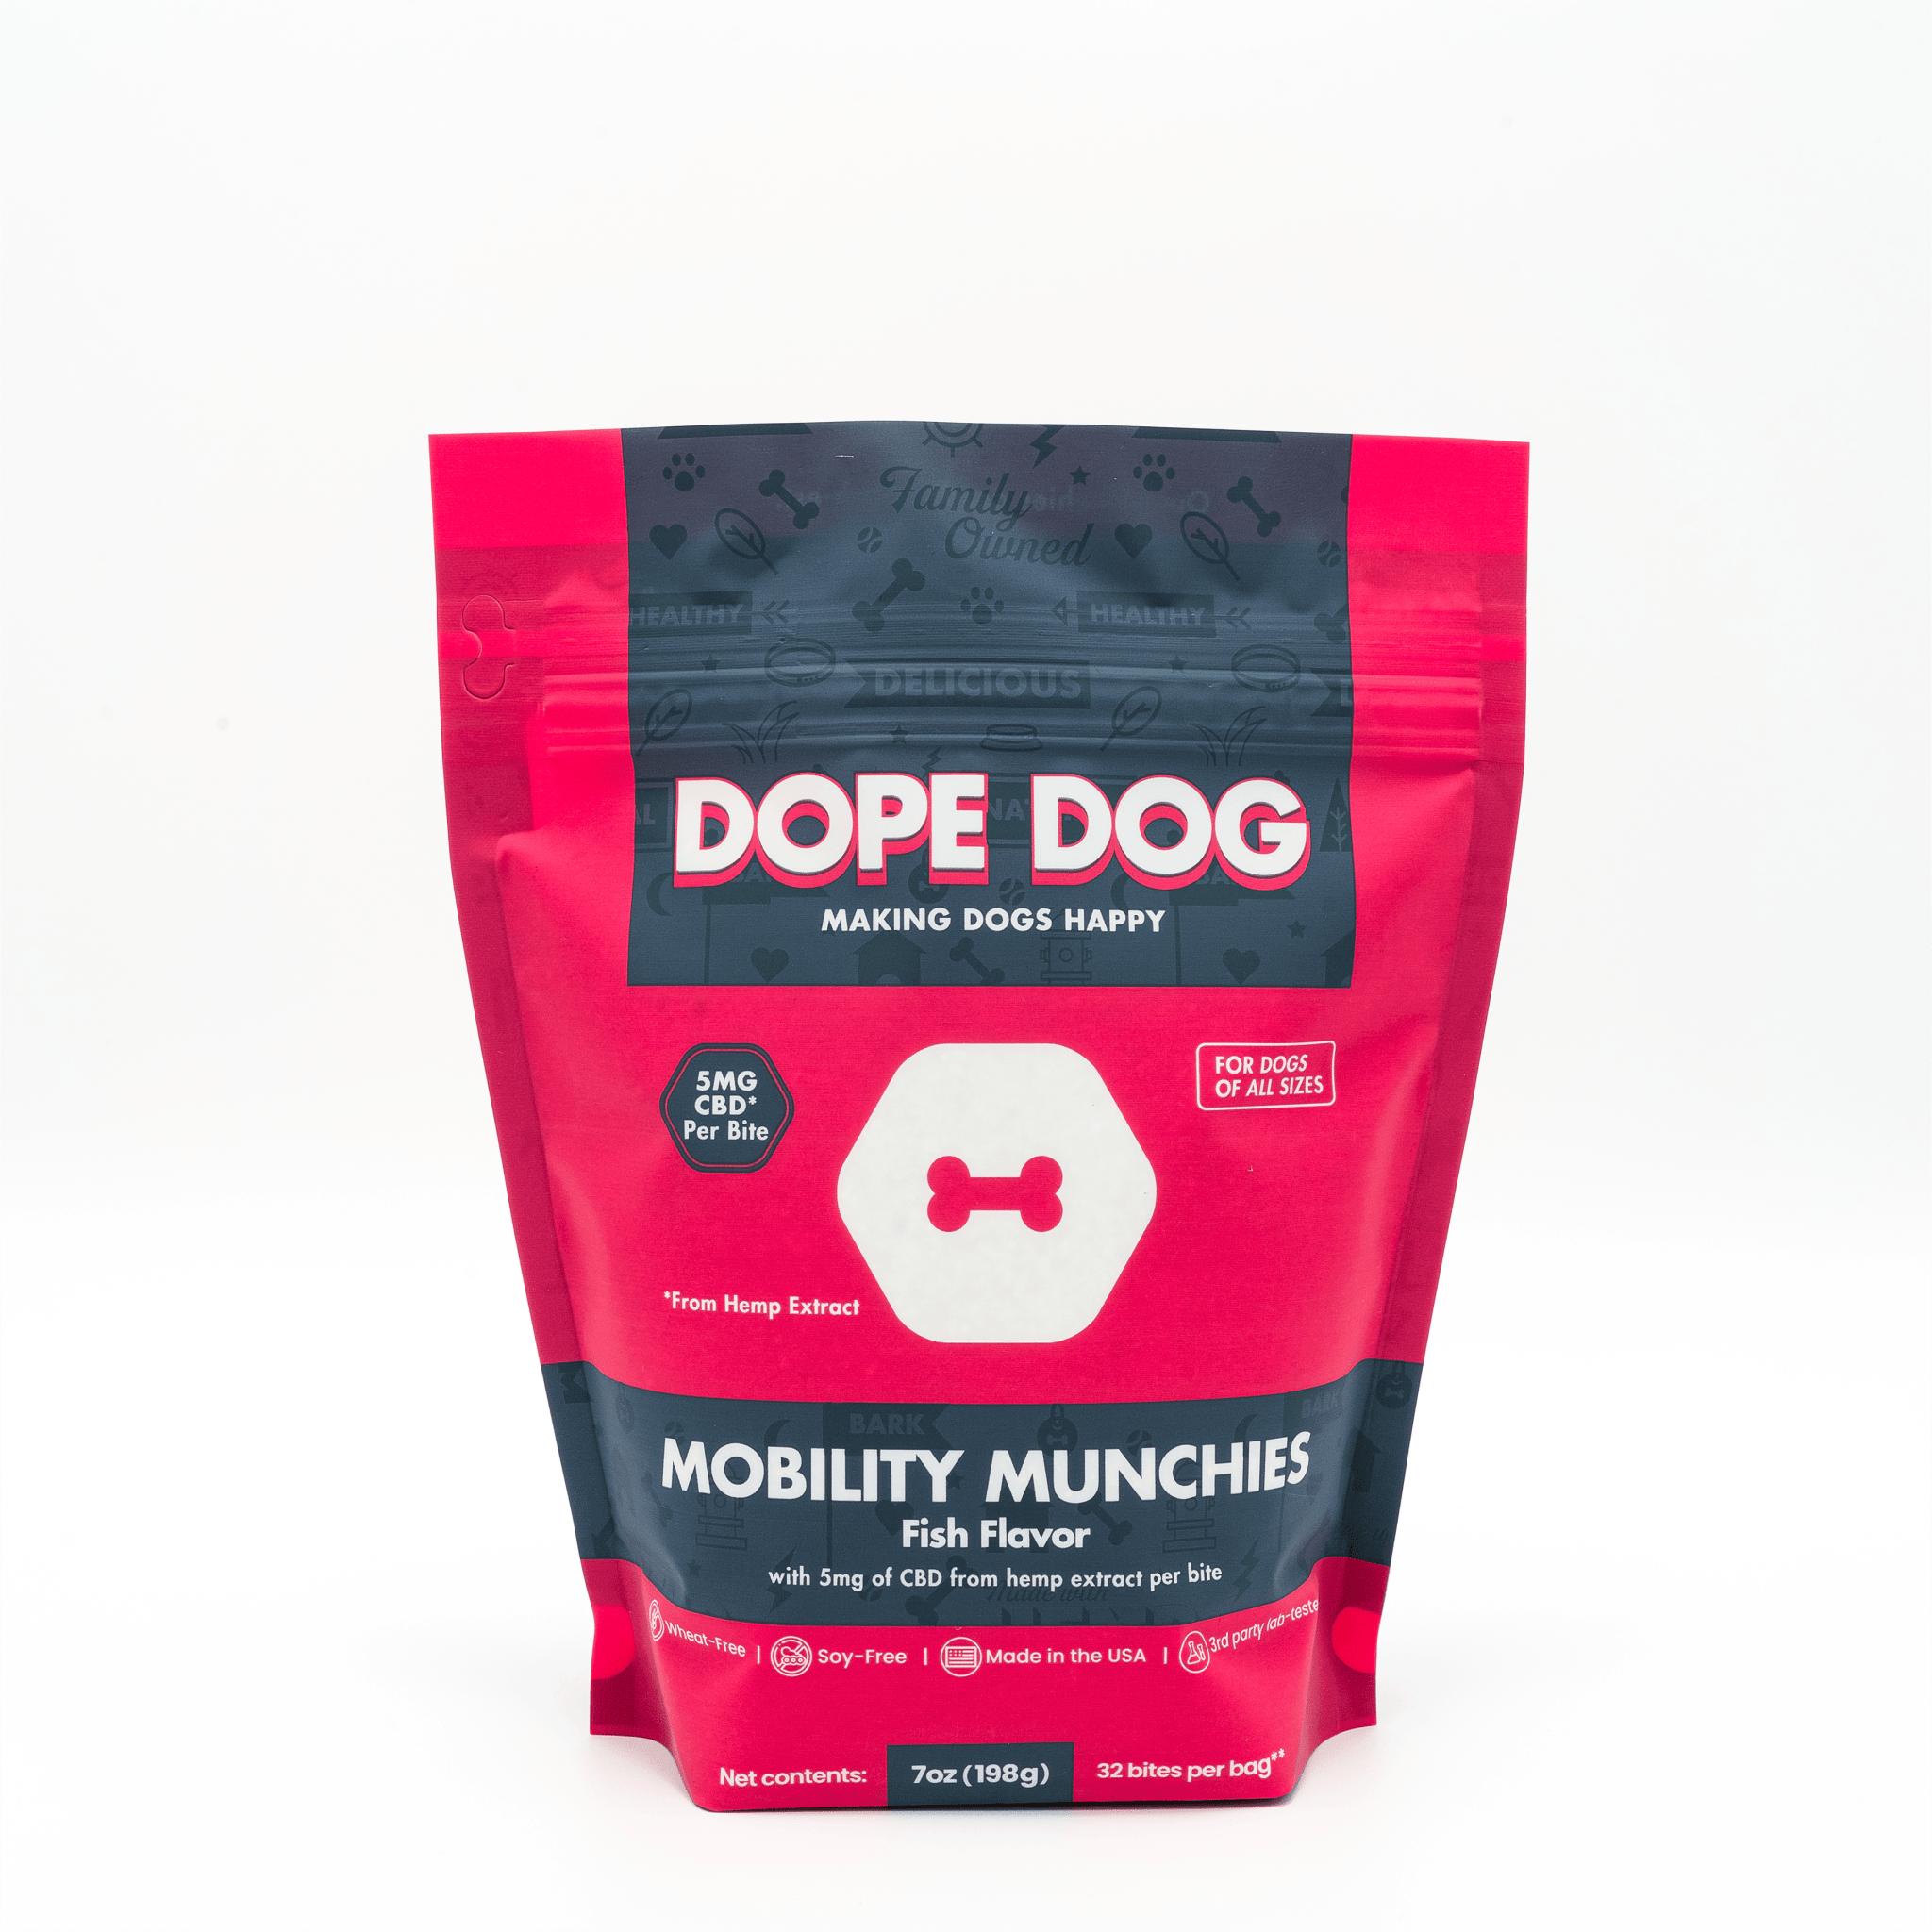 Mobility Munchies - Fish Flavor CBD Dog Treats